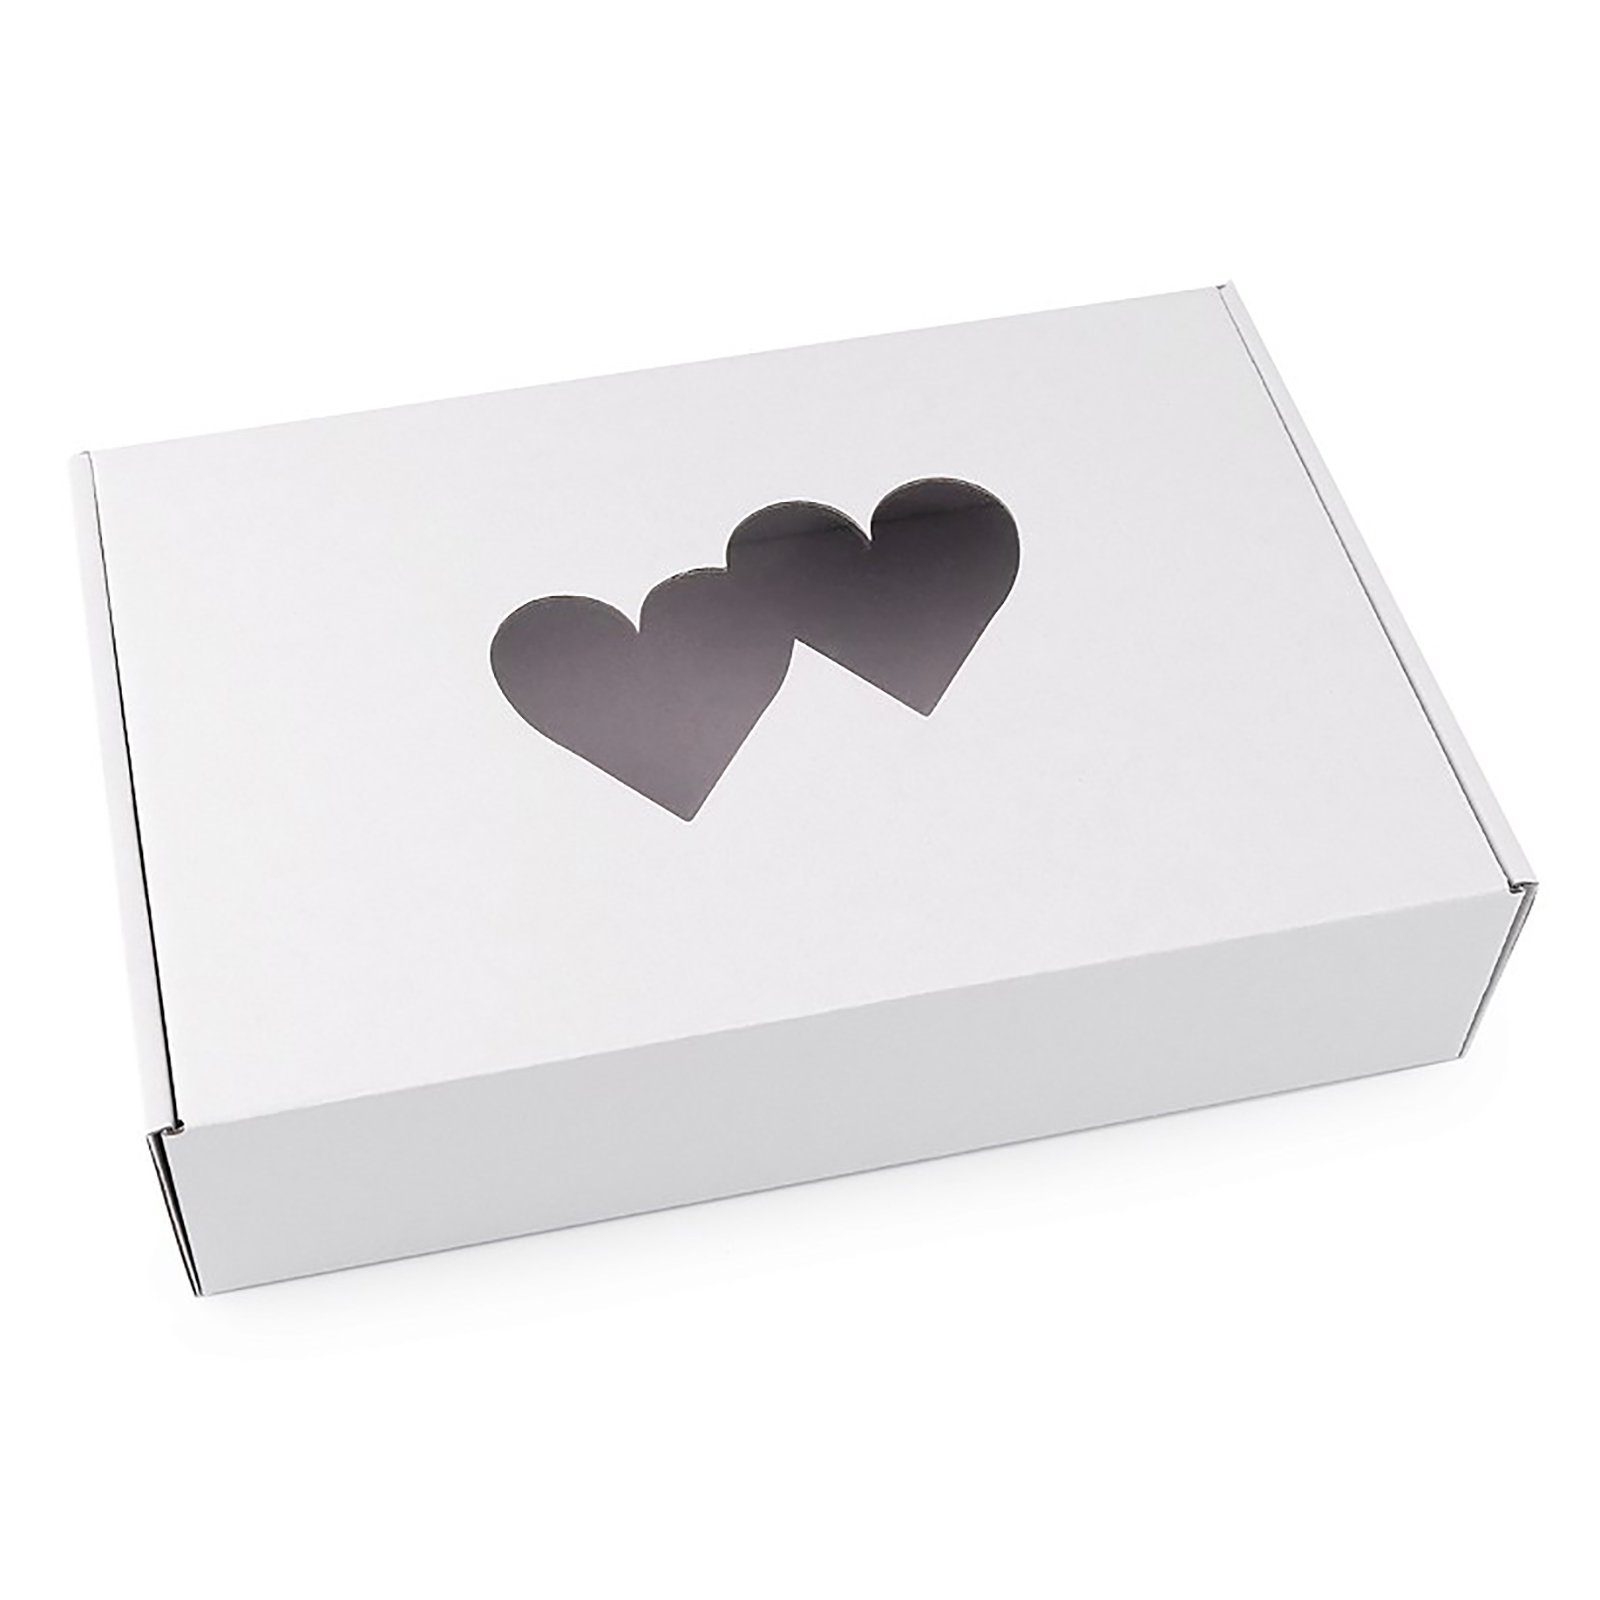 maDDma Geschenkbox 1 Geschenkschachtel Pappschachtel rechteckig Sichtfenster Herzform, 25 x 17 x 6 cm